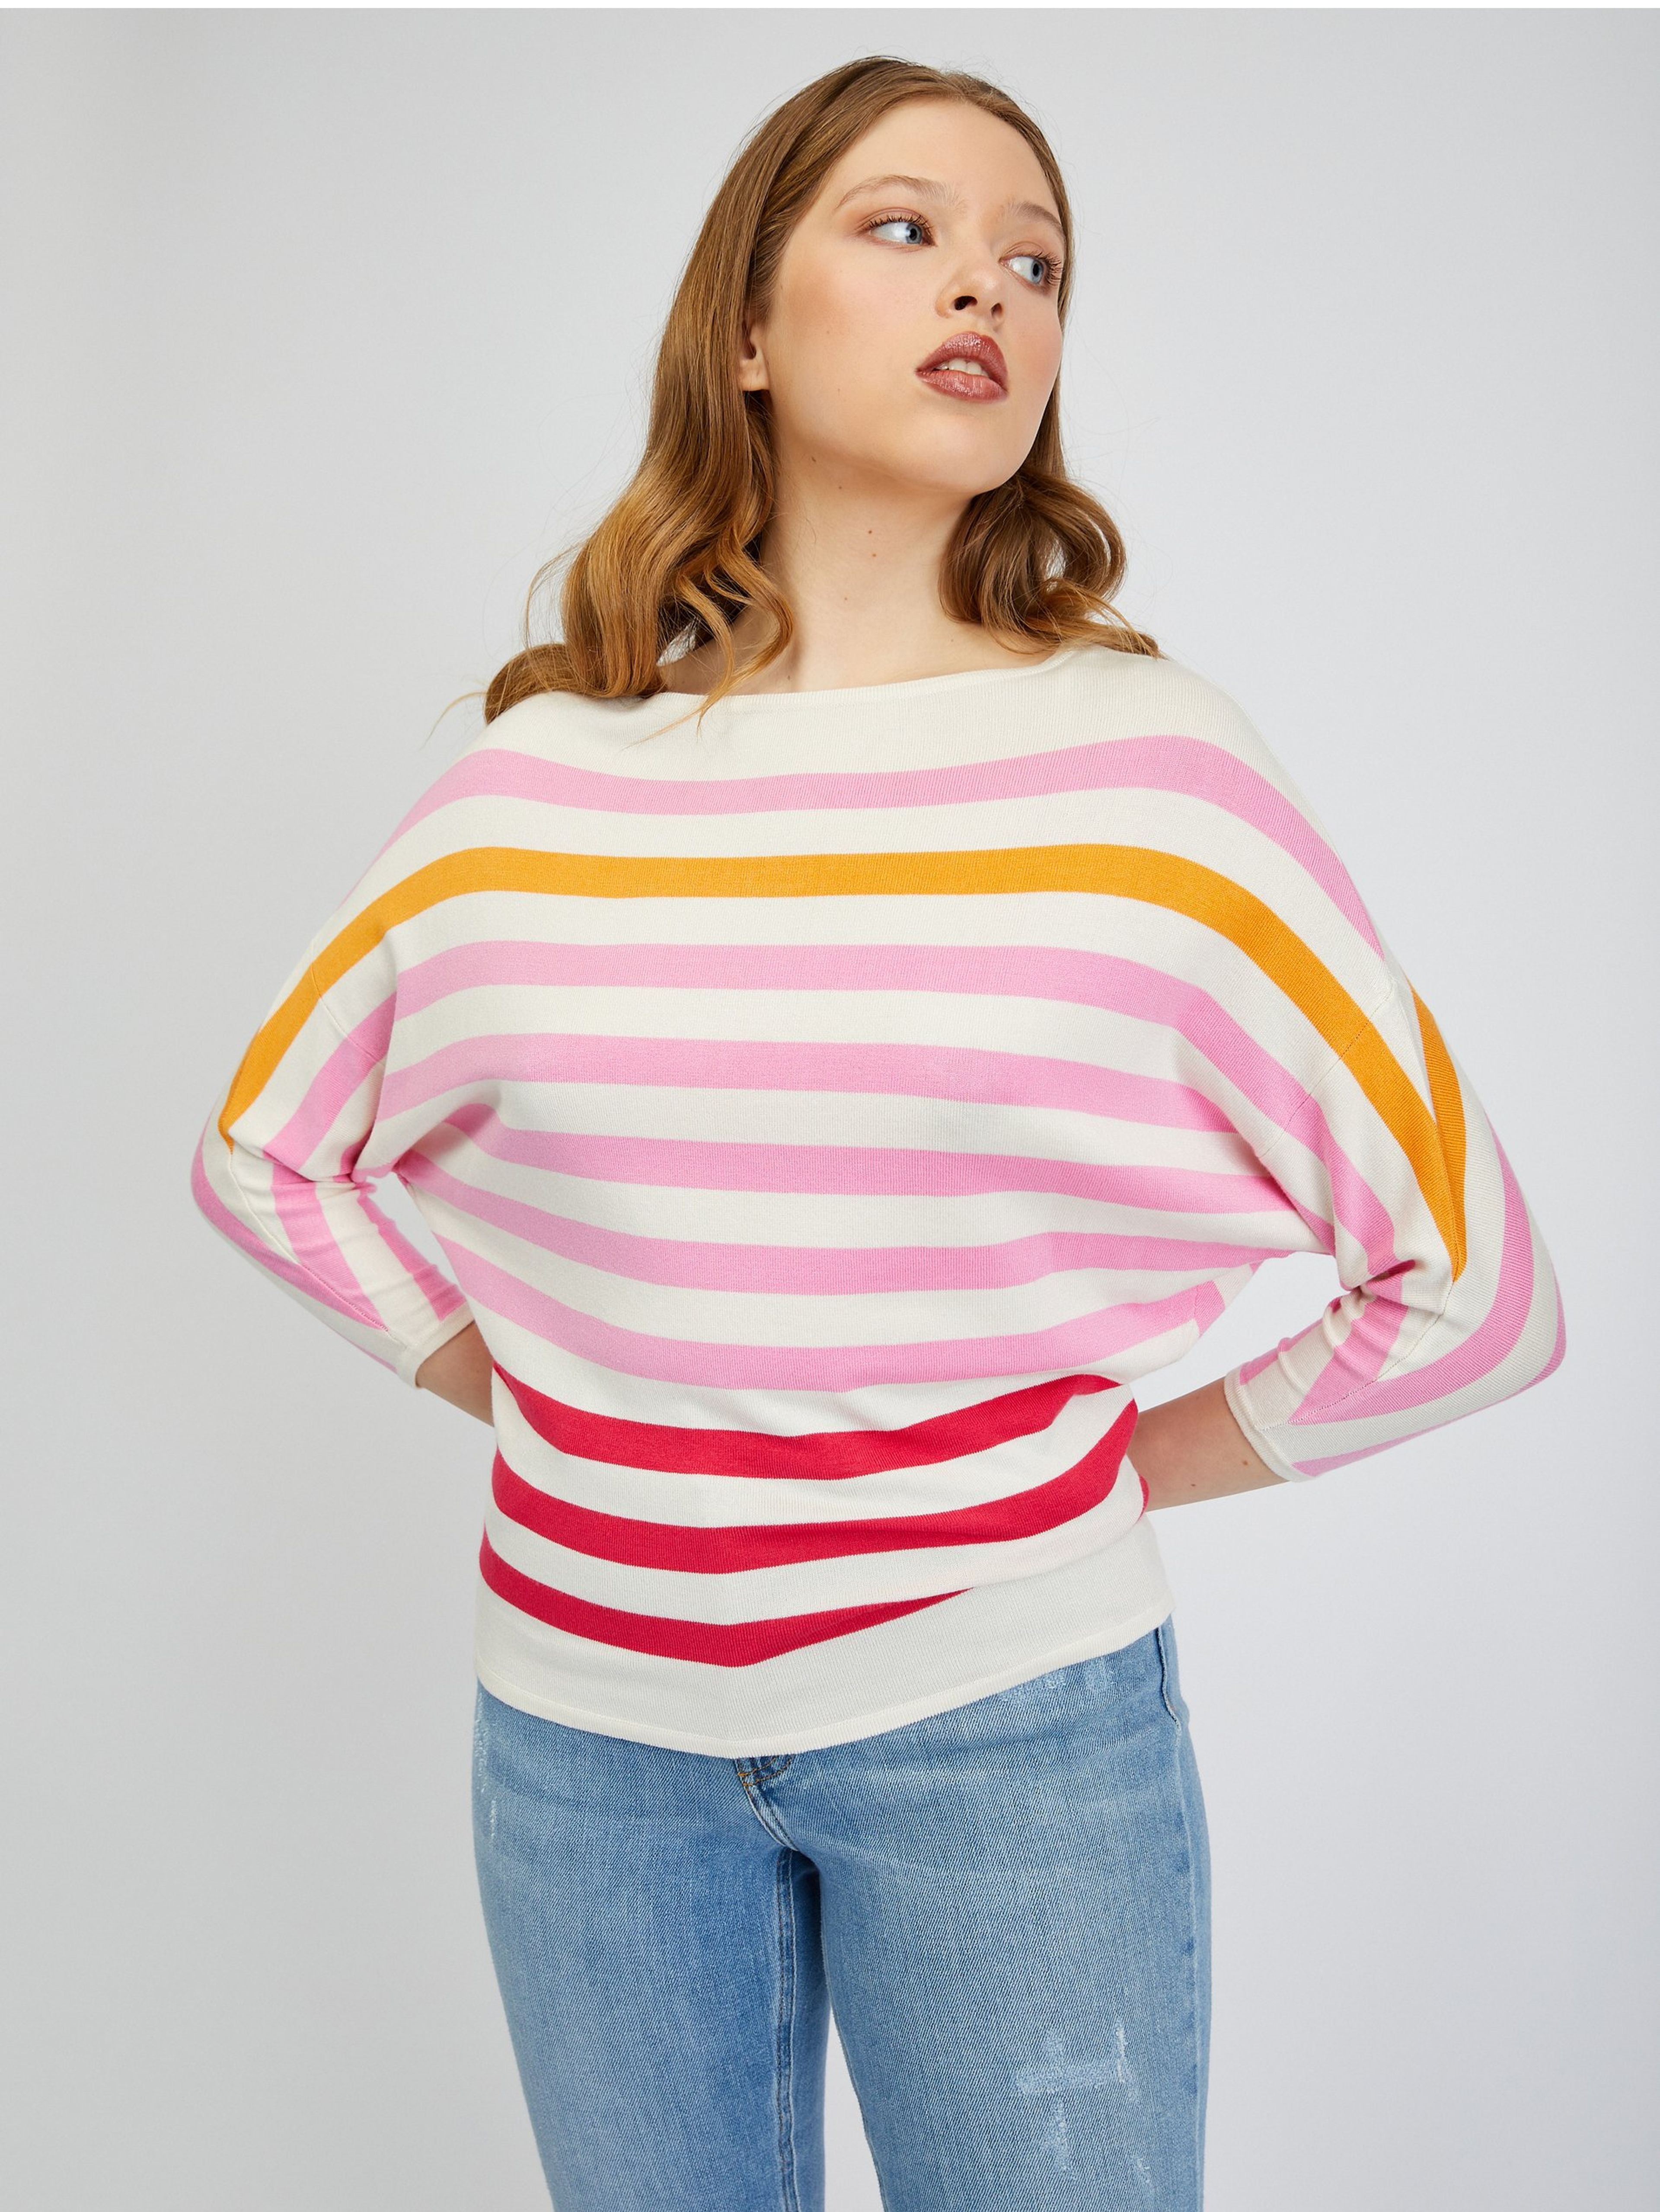 Różowo-kremowy sweter damski w paski ORSAY